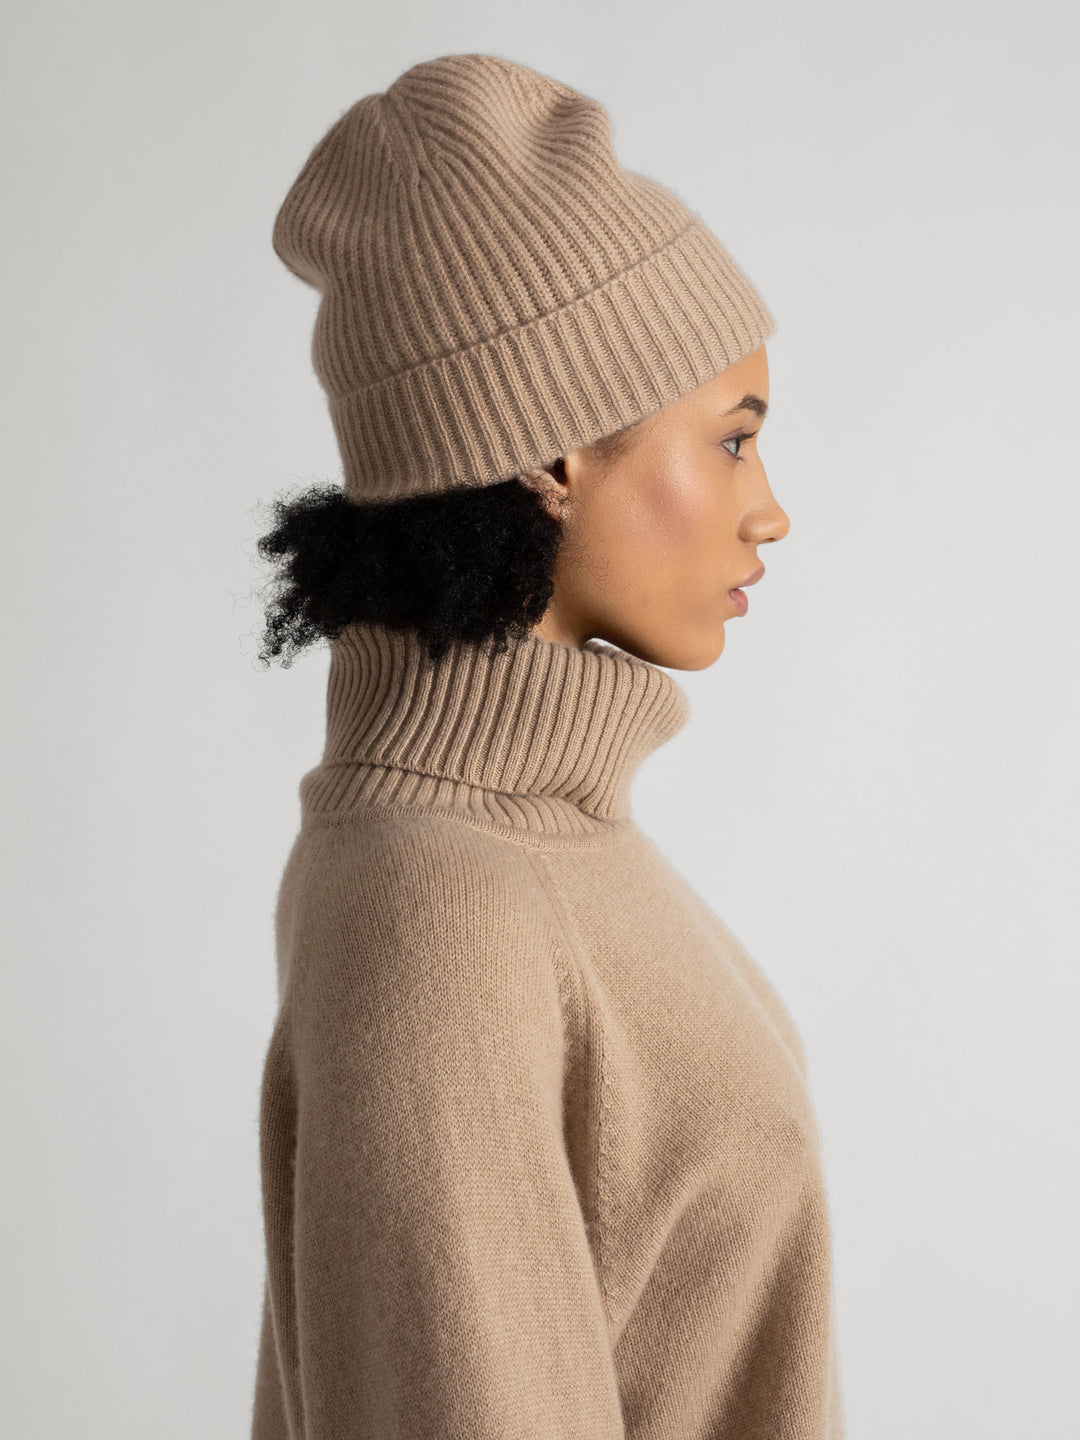 Cashmere cap "Elli" in 100% cashmere. Color: Sand. Scandinavian design by Kashmina